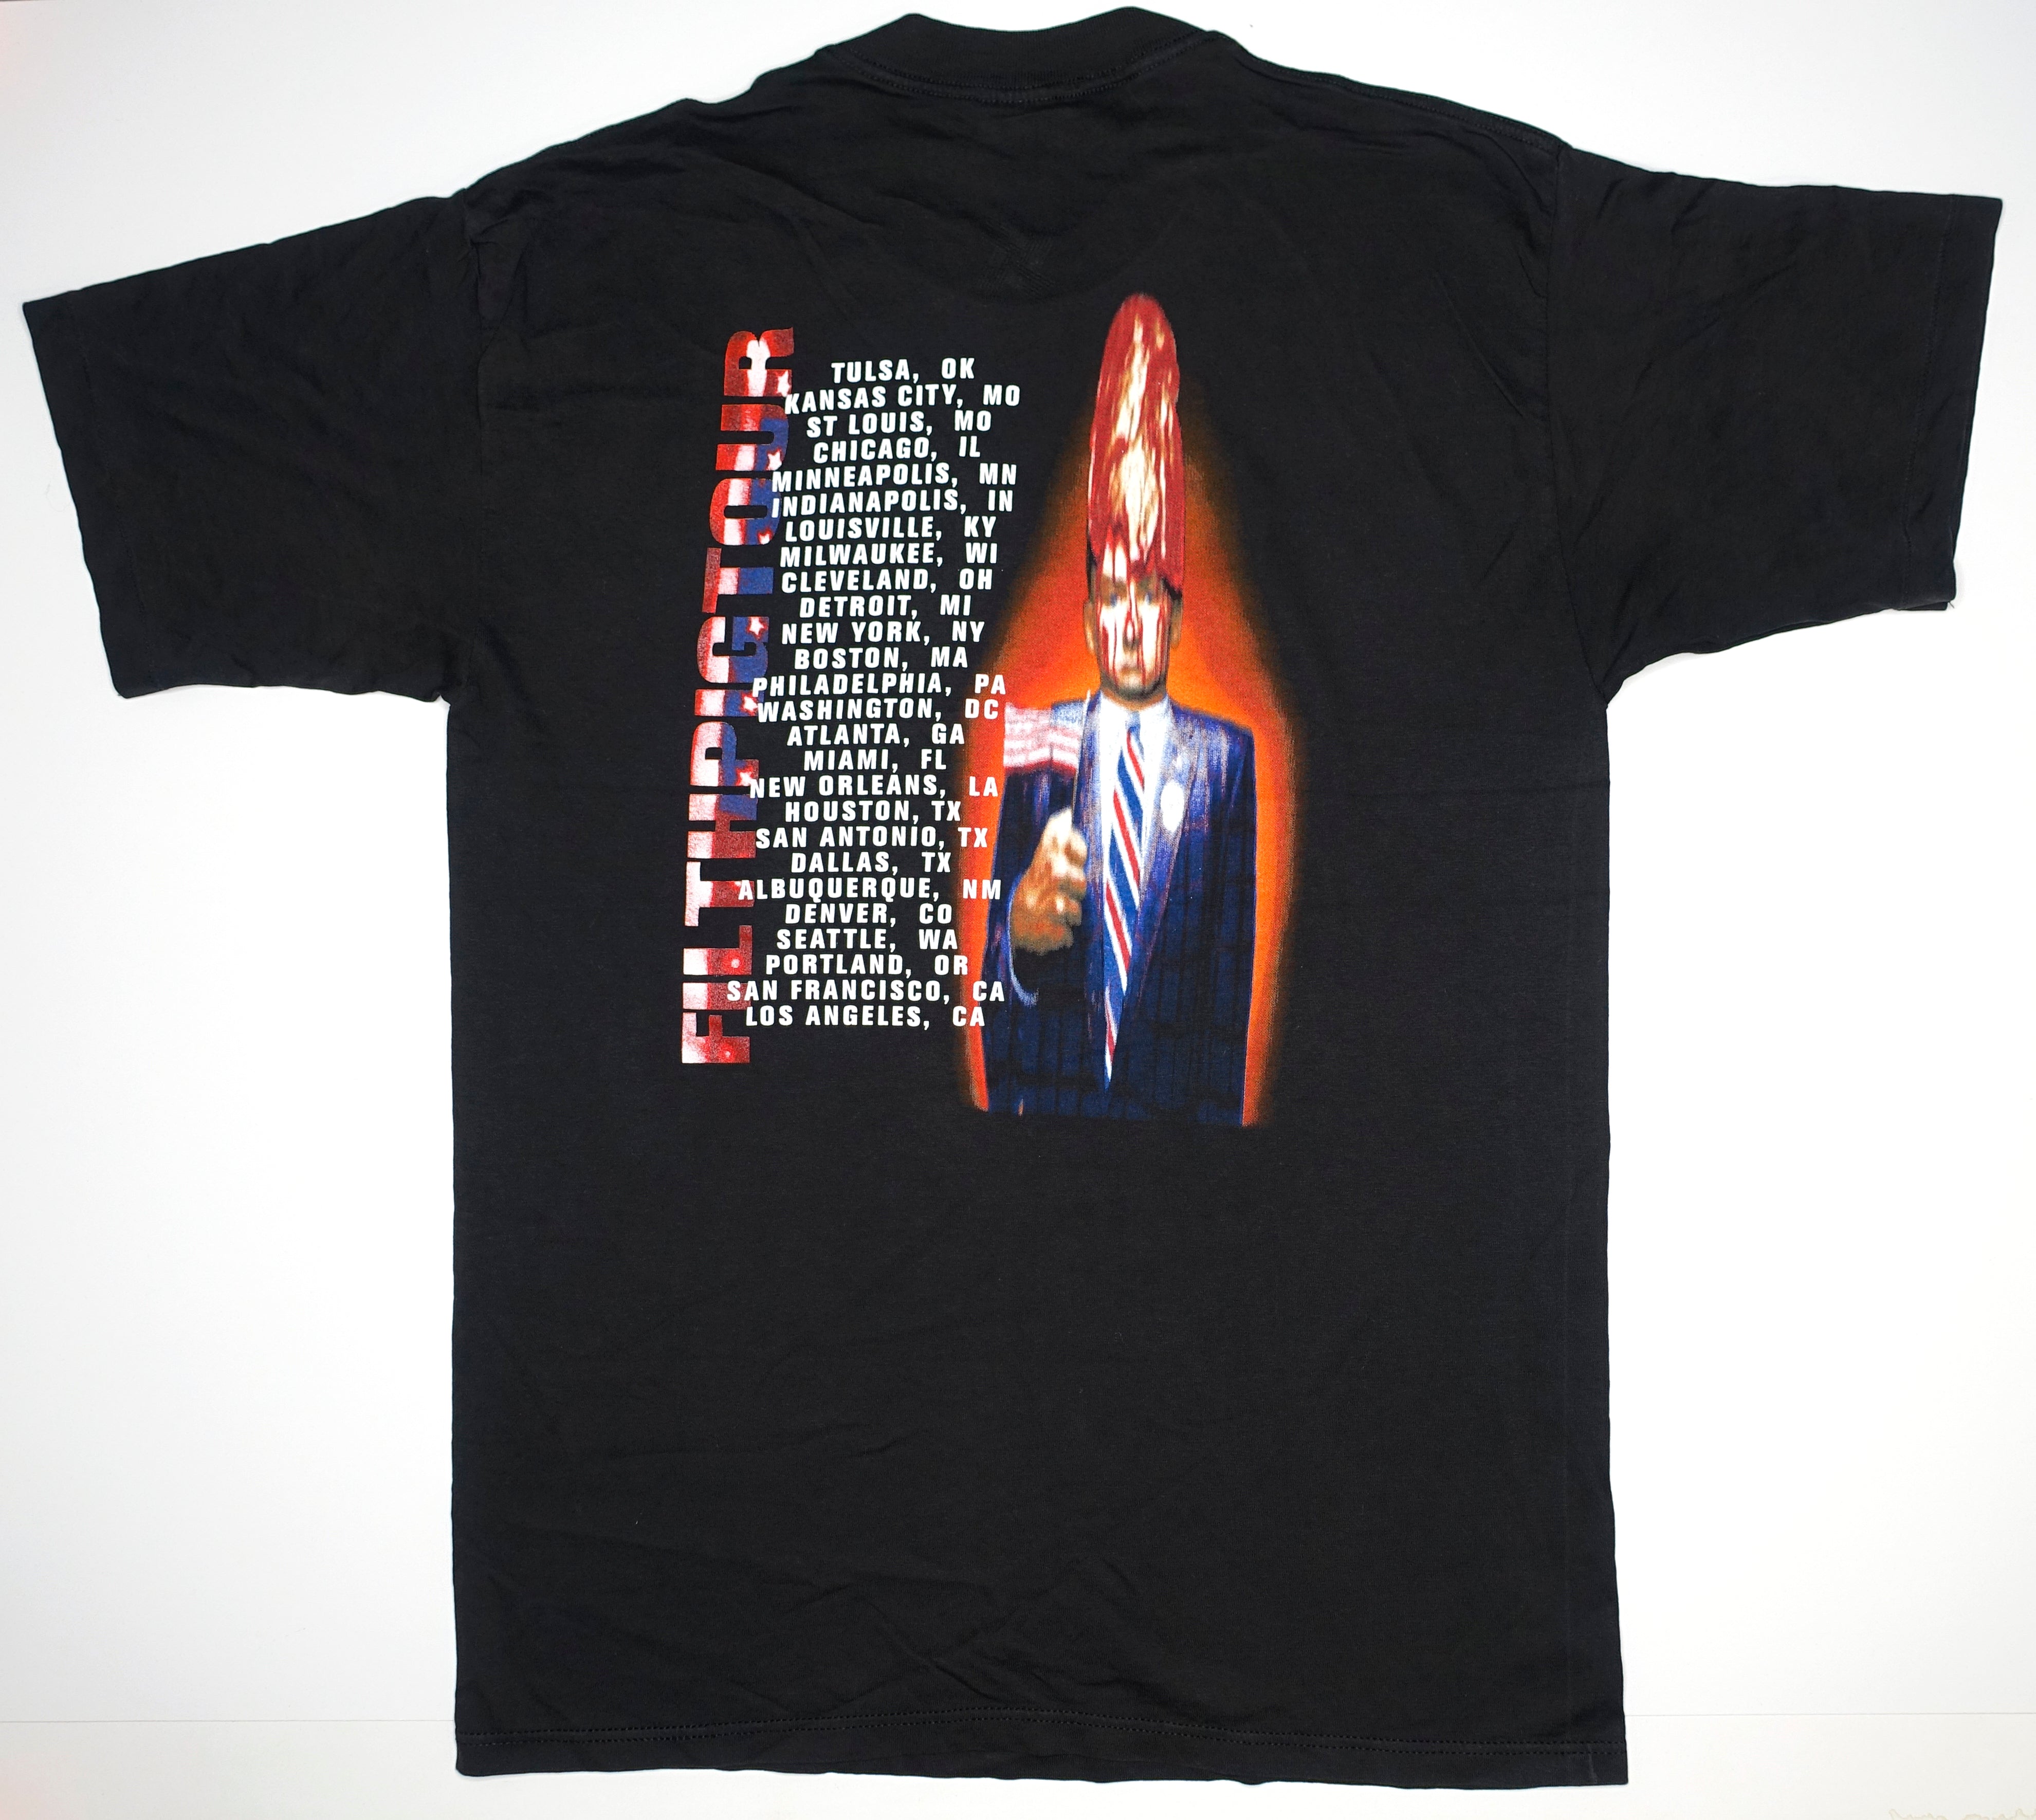 Ministry - Filthy Pig 1995 Tour Shirt Size XL